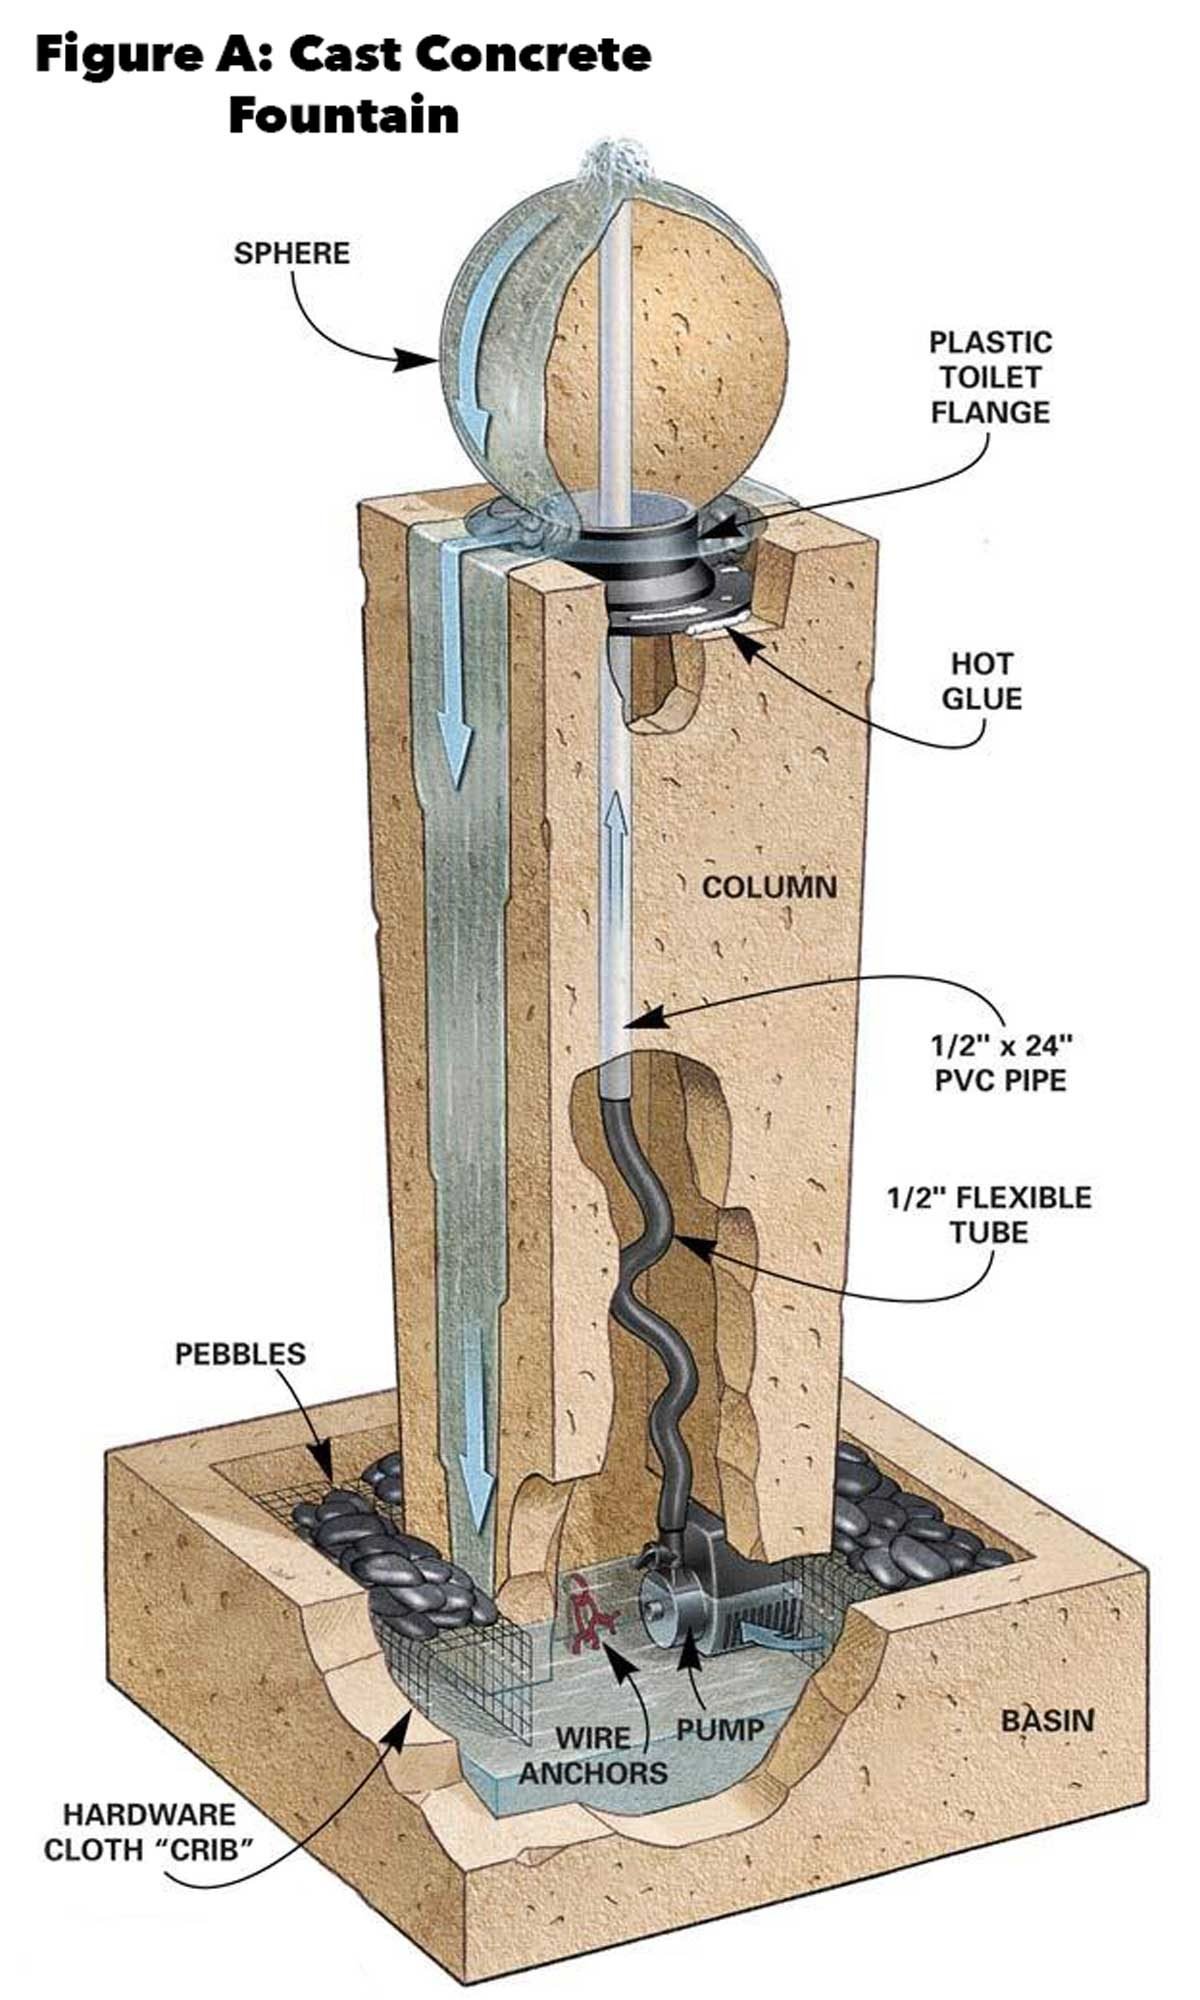 How to Cast Concrete Fountains